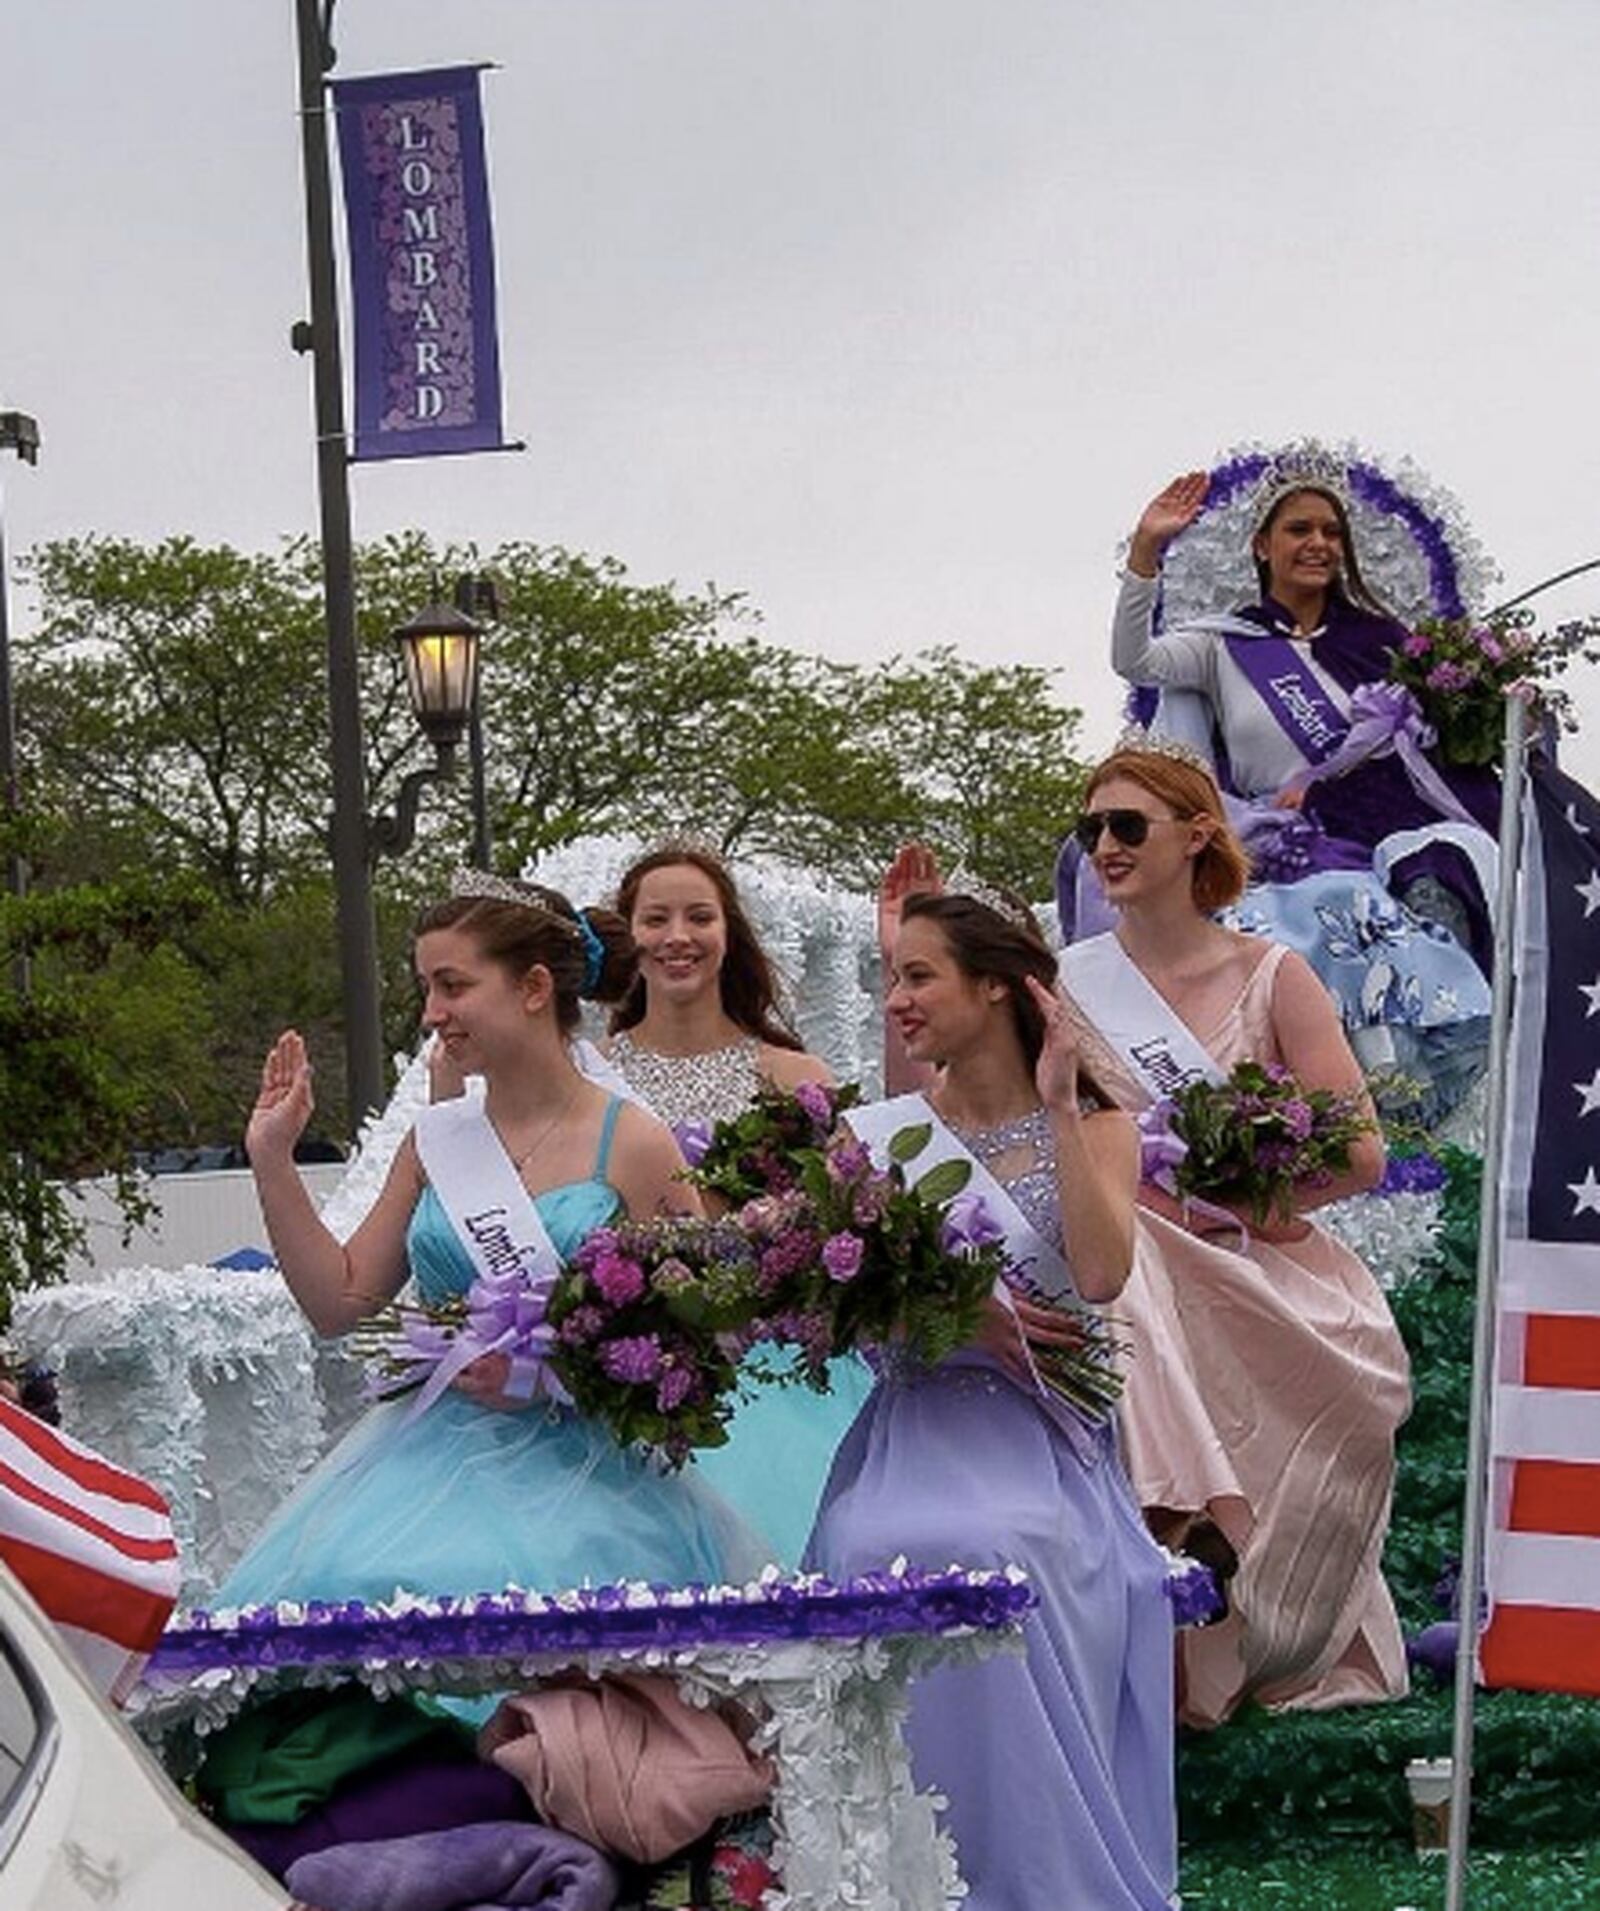 Lilac Parade returns to Lombard after threeyear hiatus Shaw Local